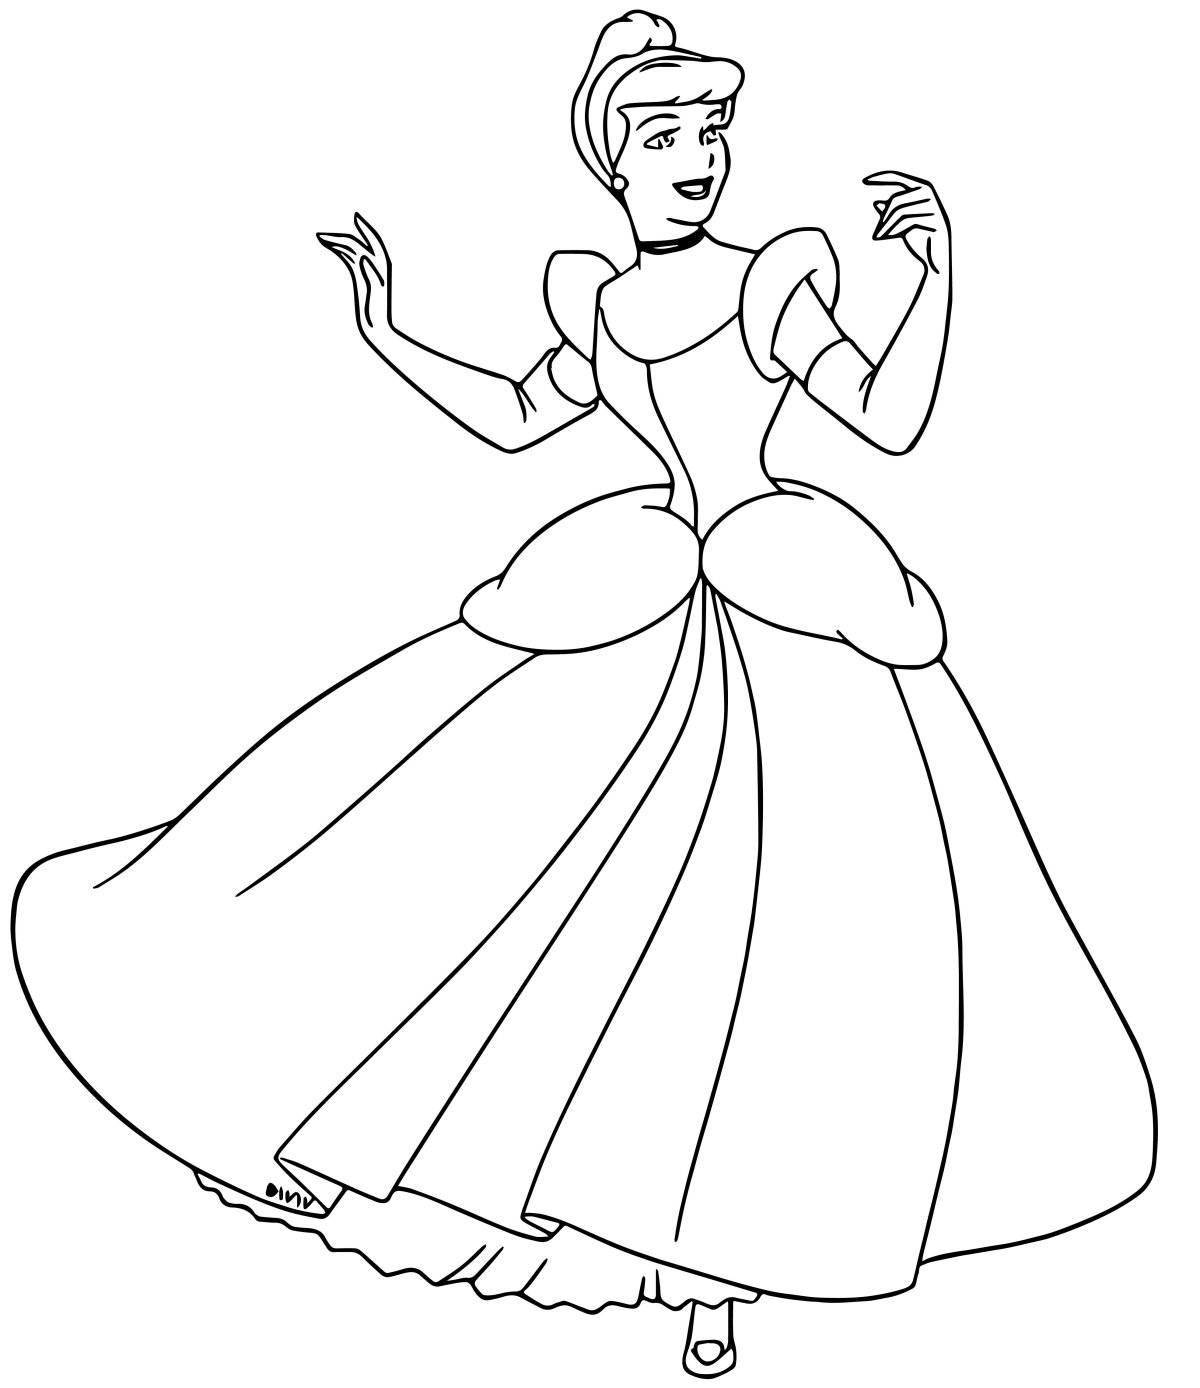 Joyful Cinderella coloring pages for kids